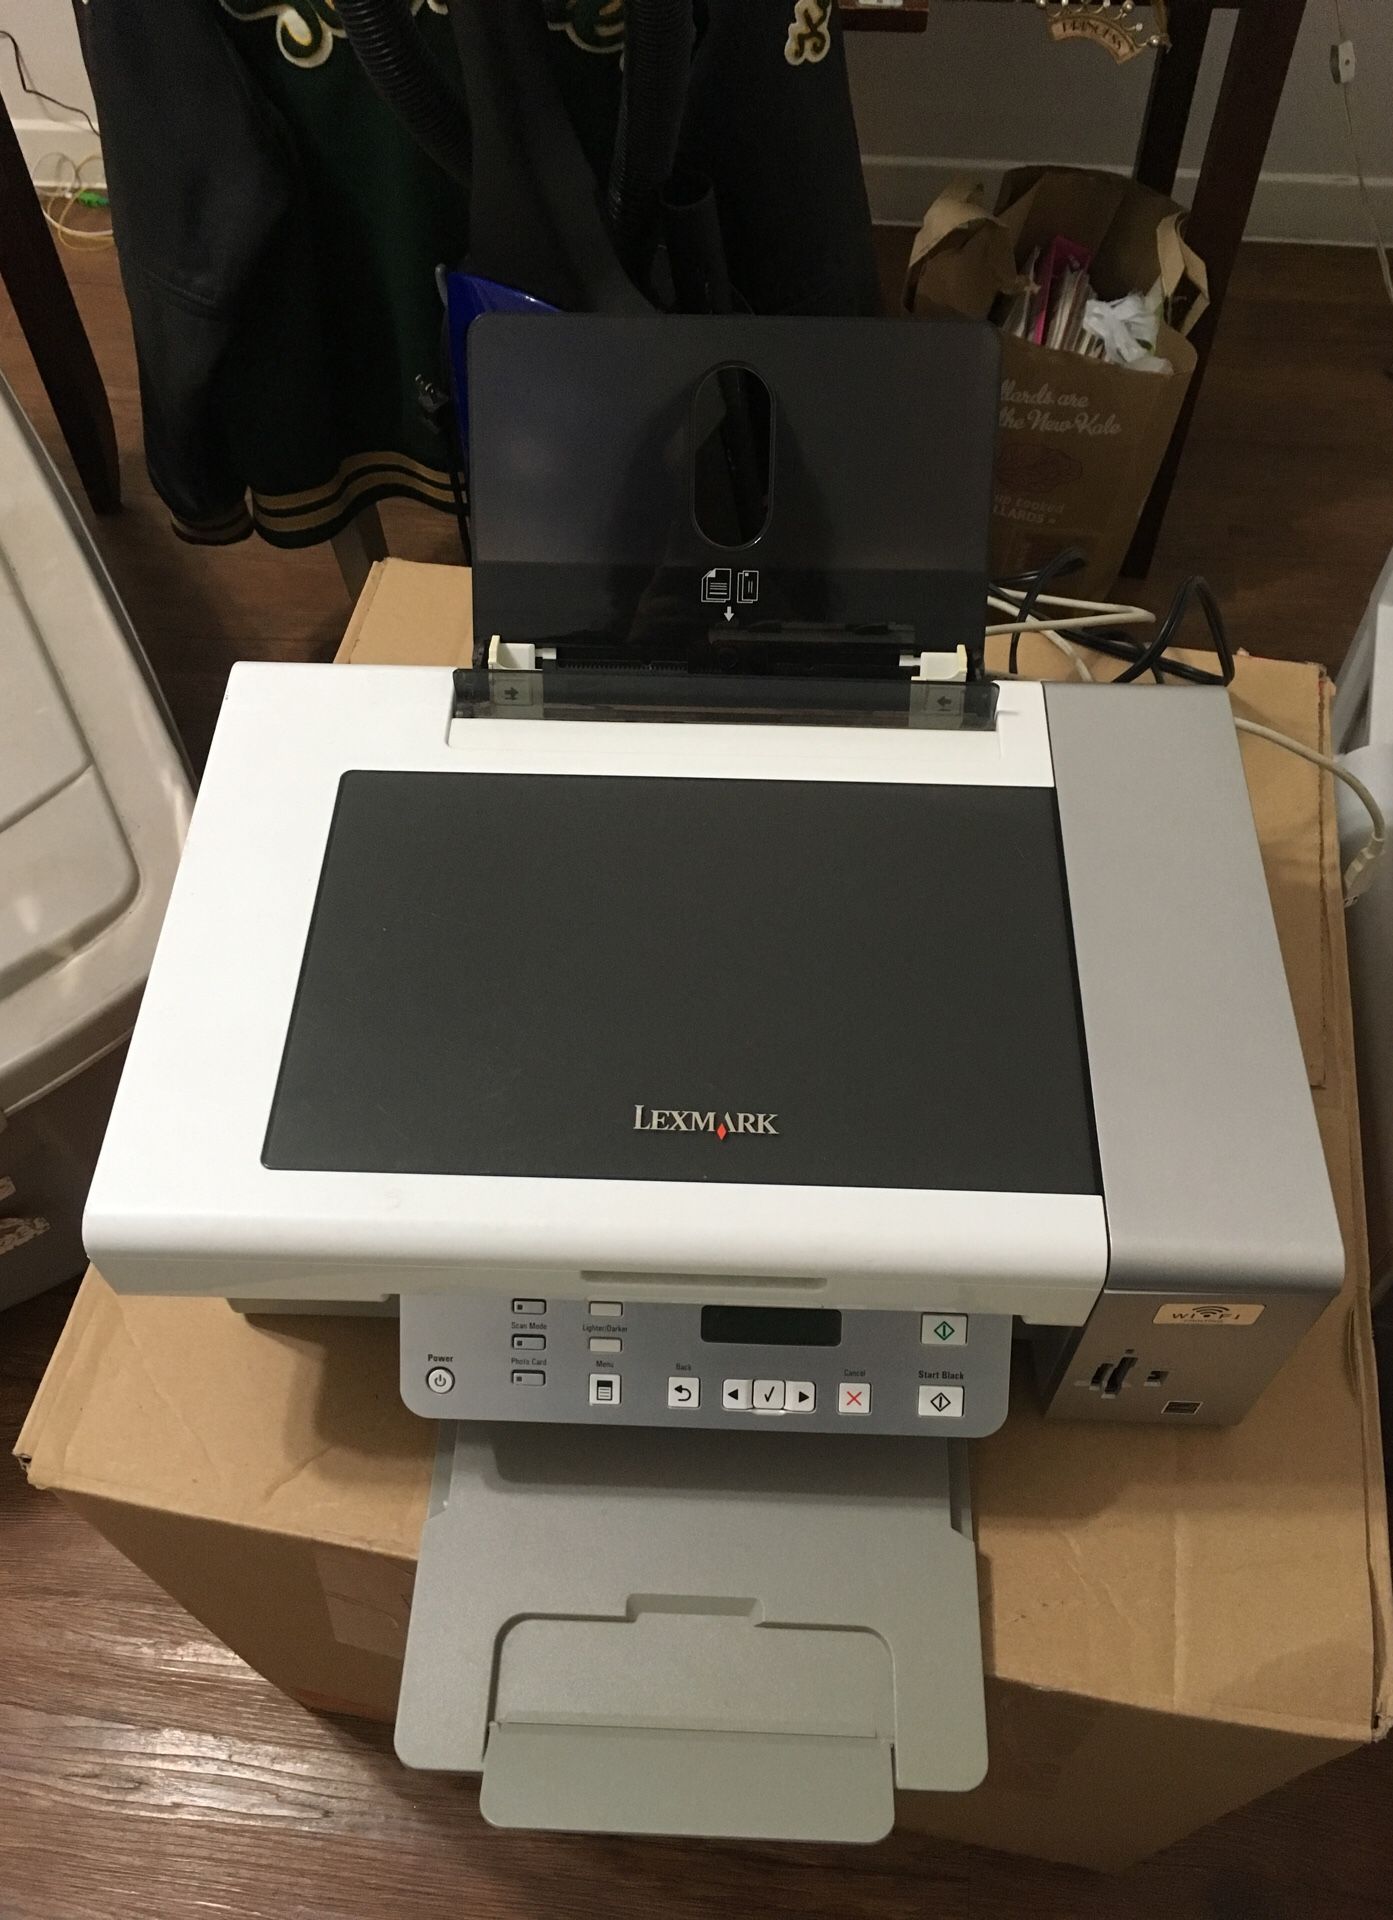 Lexmark X4550 Print/Copy/Scan All-In-One Printer